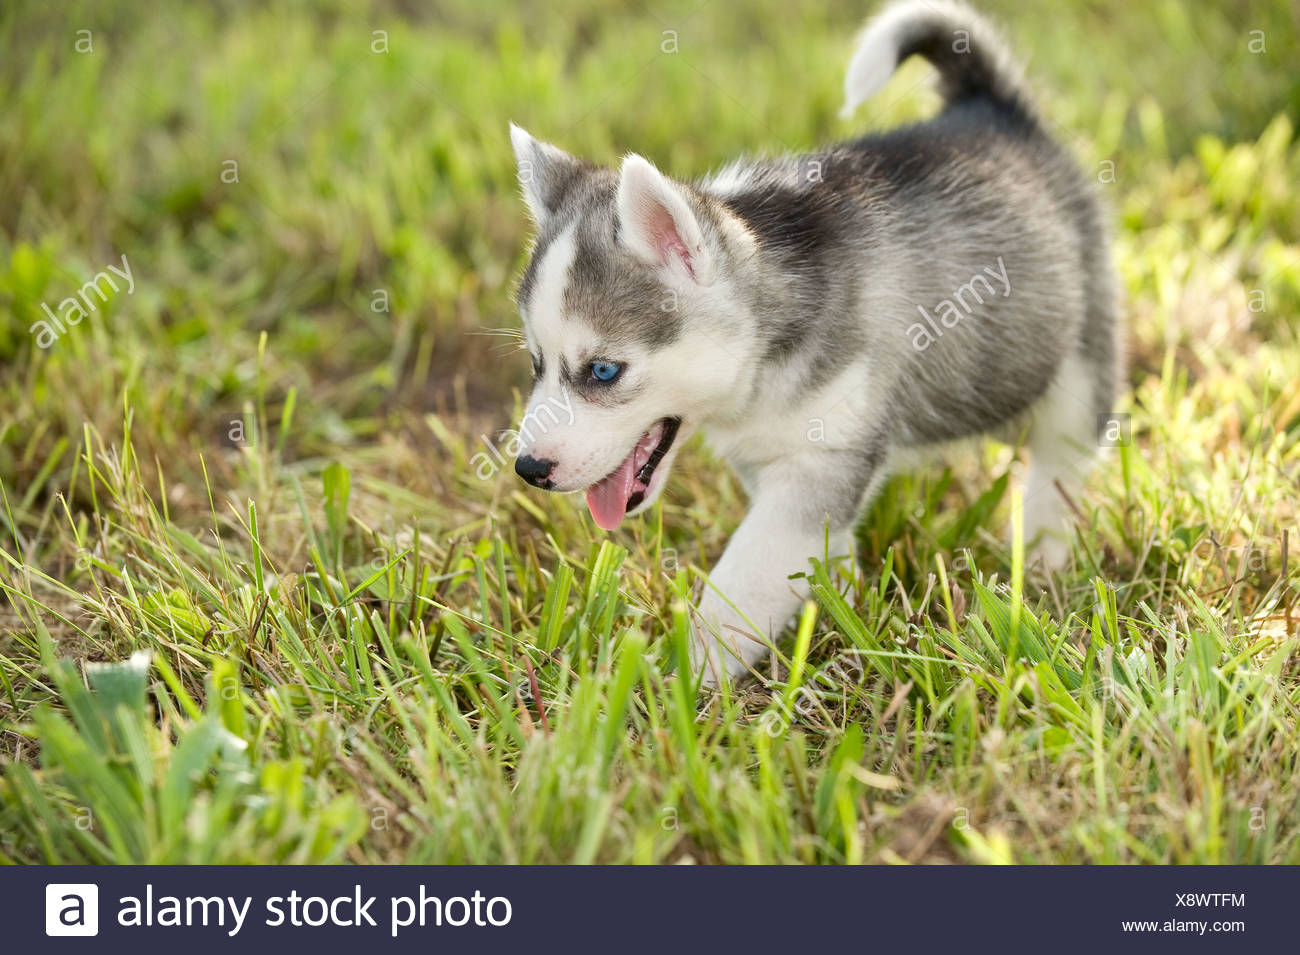 siberian husky dog puppy